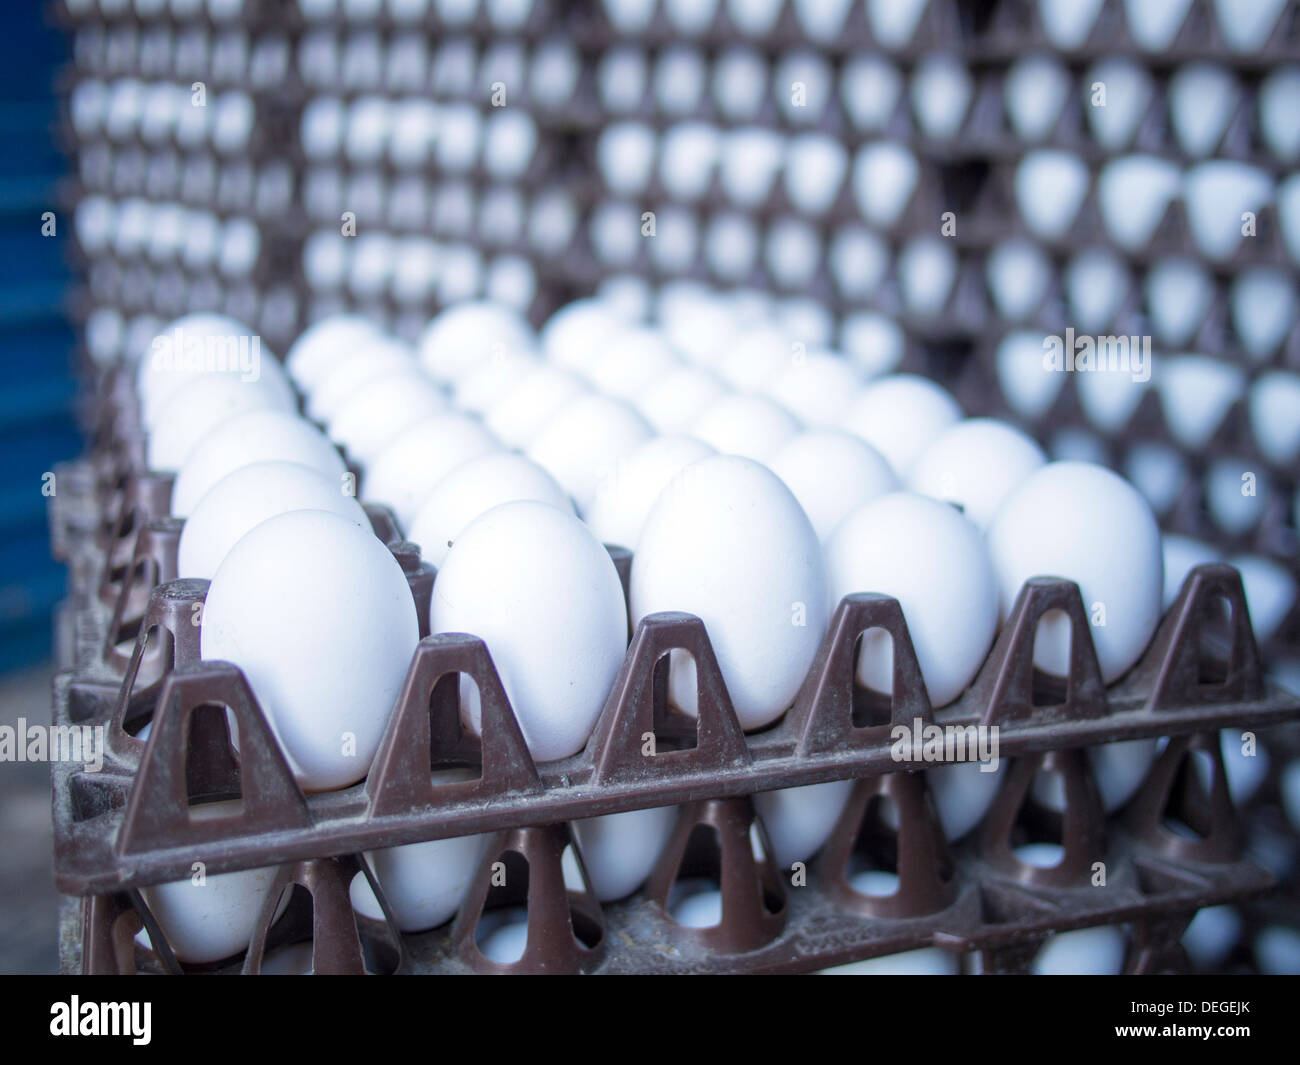 Eggs get stacked in crates in Bangalore, Karnataka, India. Stock Photo